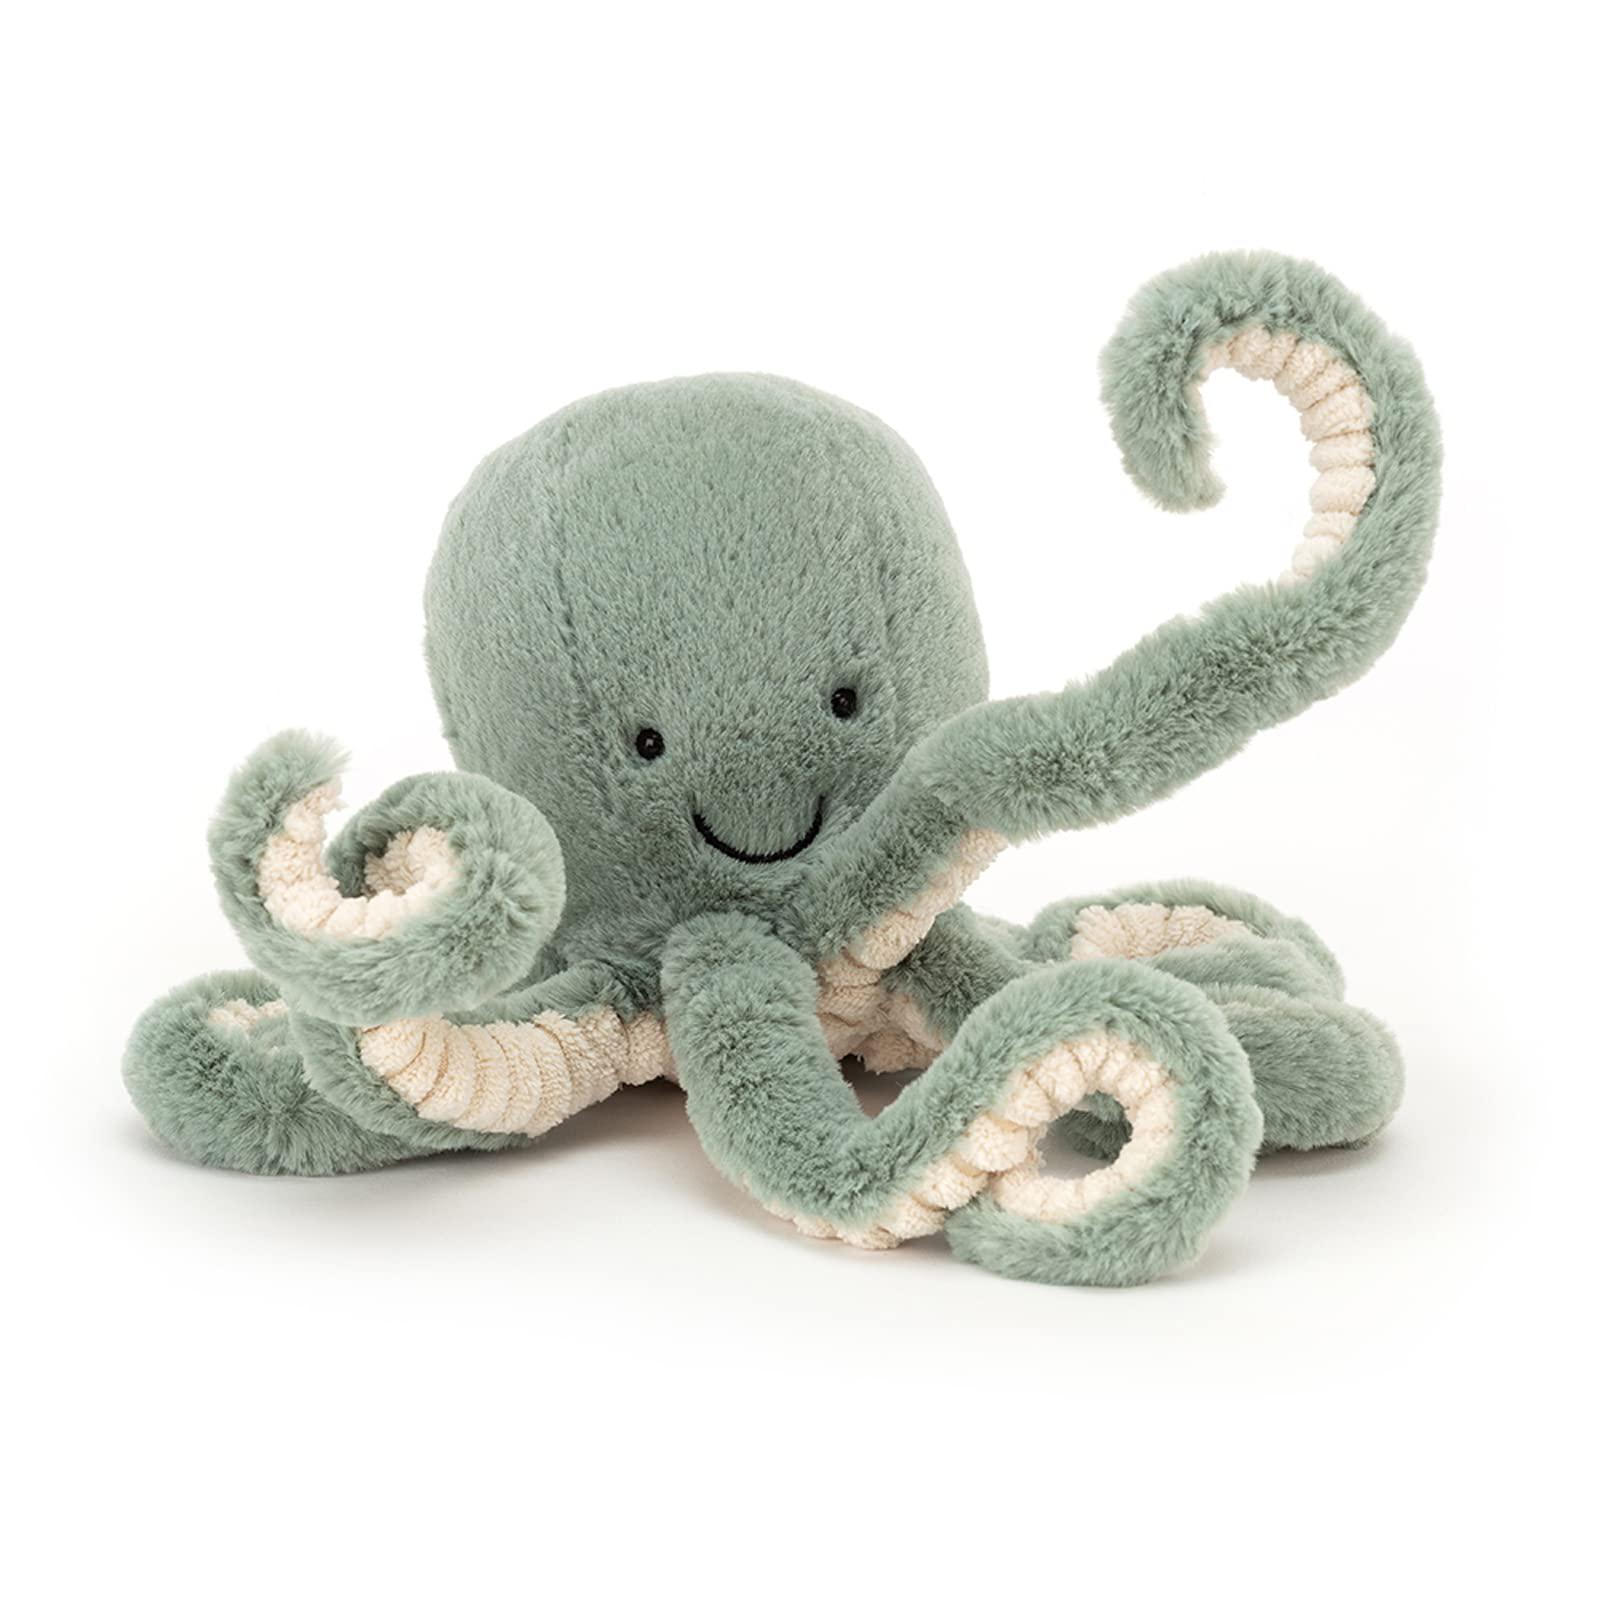 jellycat odyssey octopus stuffed animal, medium 9 inches